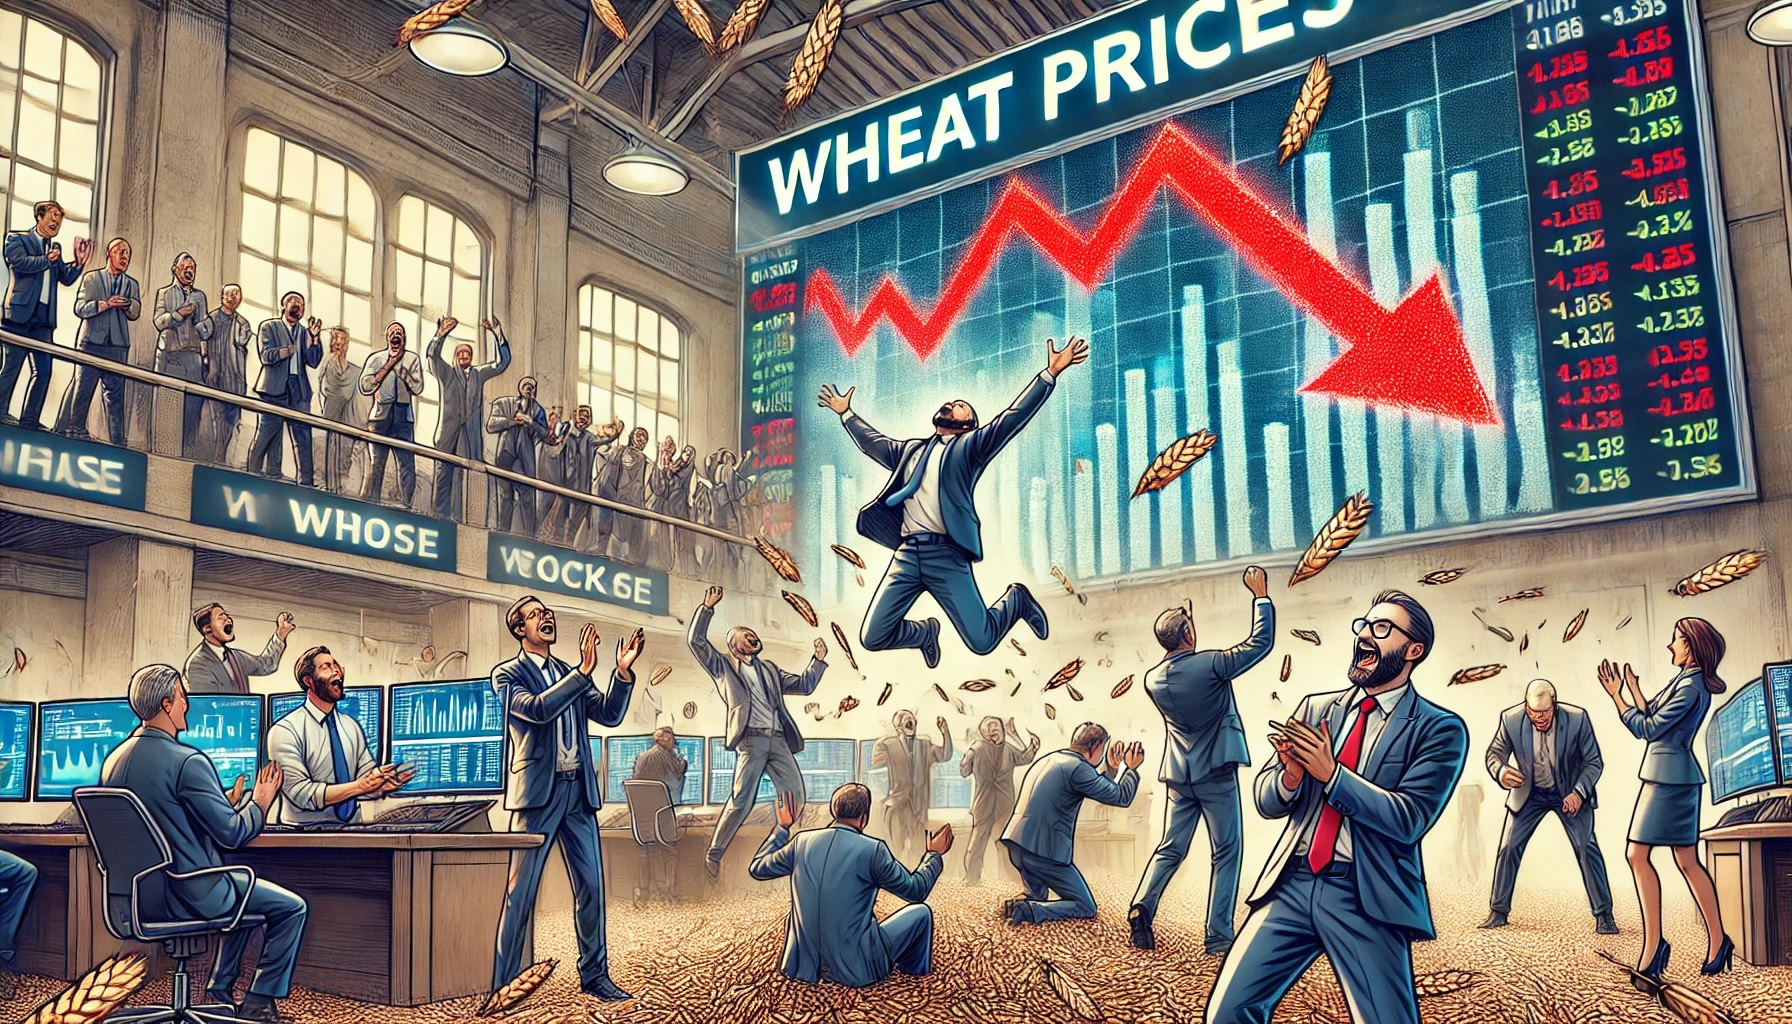 Broker reagieren auf den fallenden Weizenpreis an der Börse. HRW-Weizen US-Mais Futures-Märkte Internationale Getreiderat